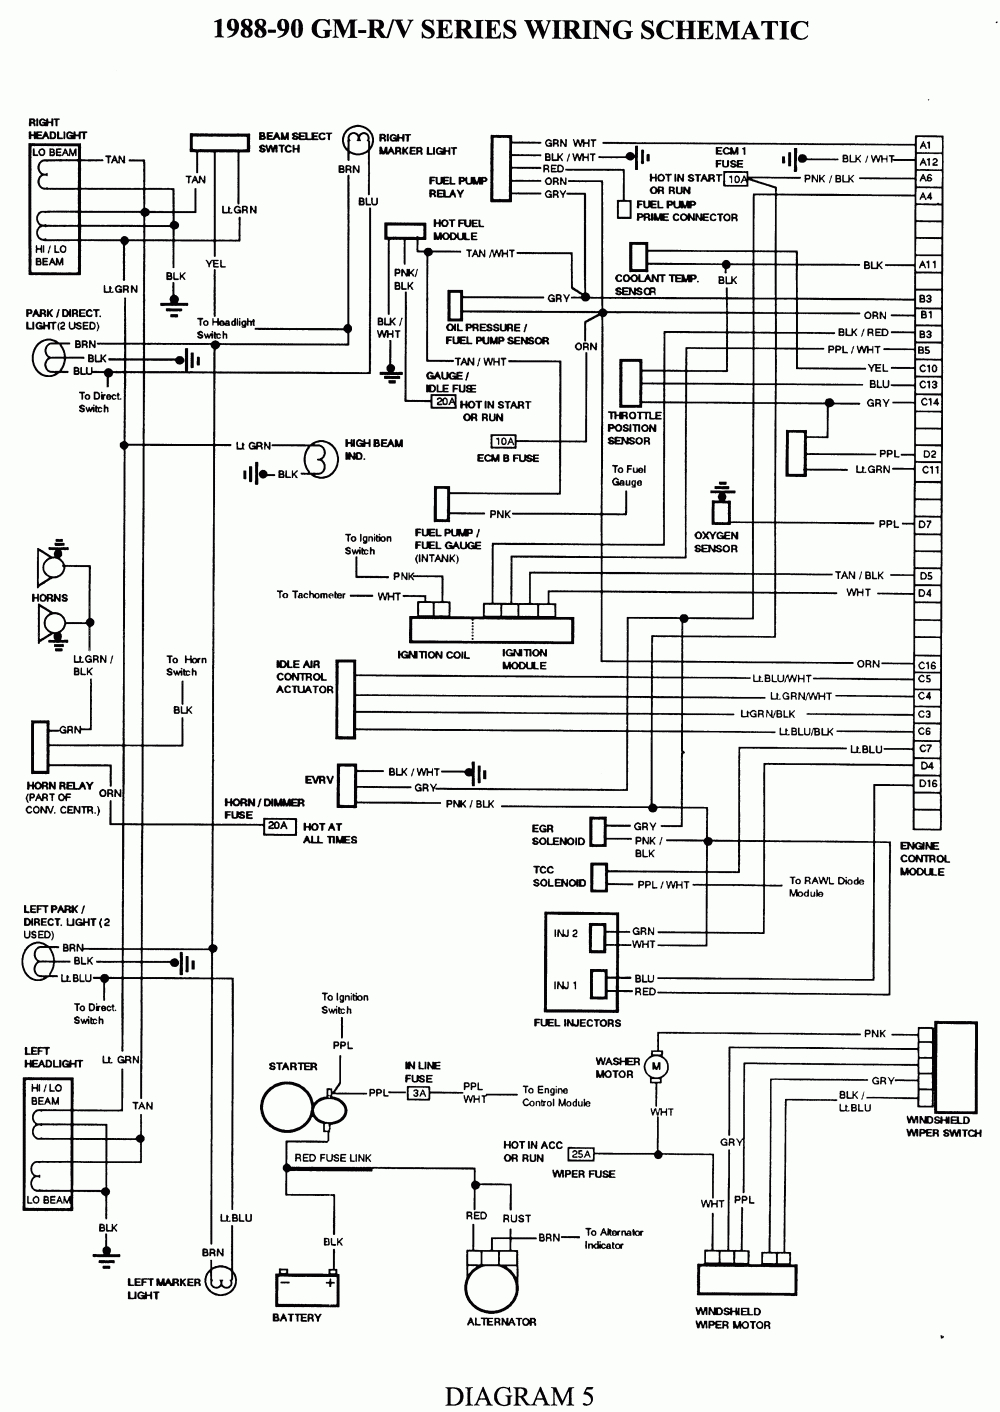 1988 chevy s10 blazer wiring diagram